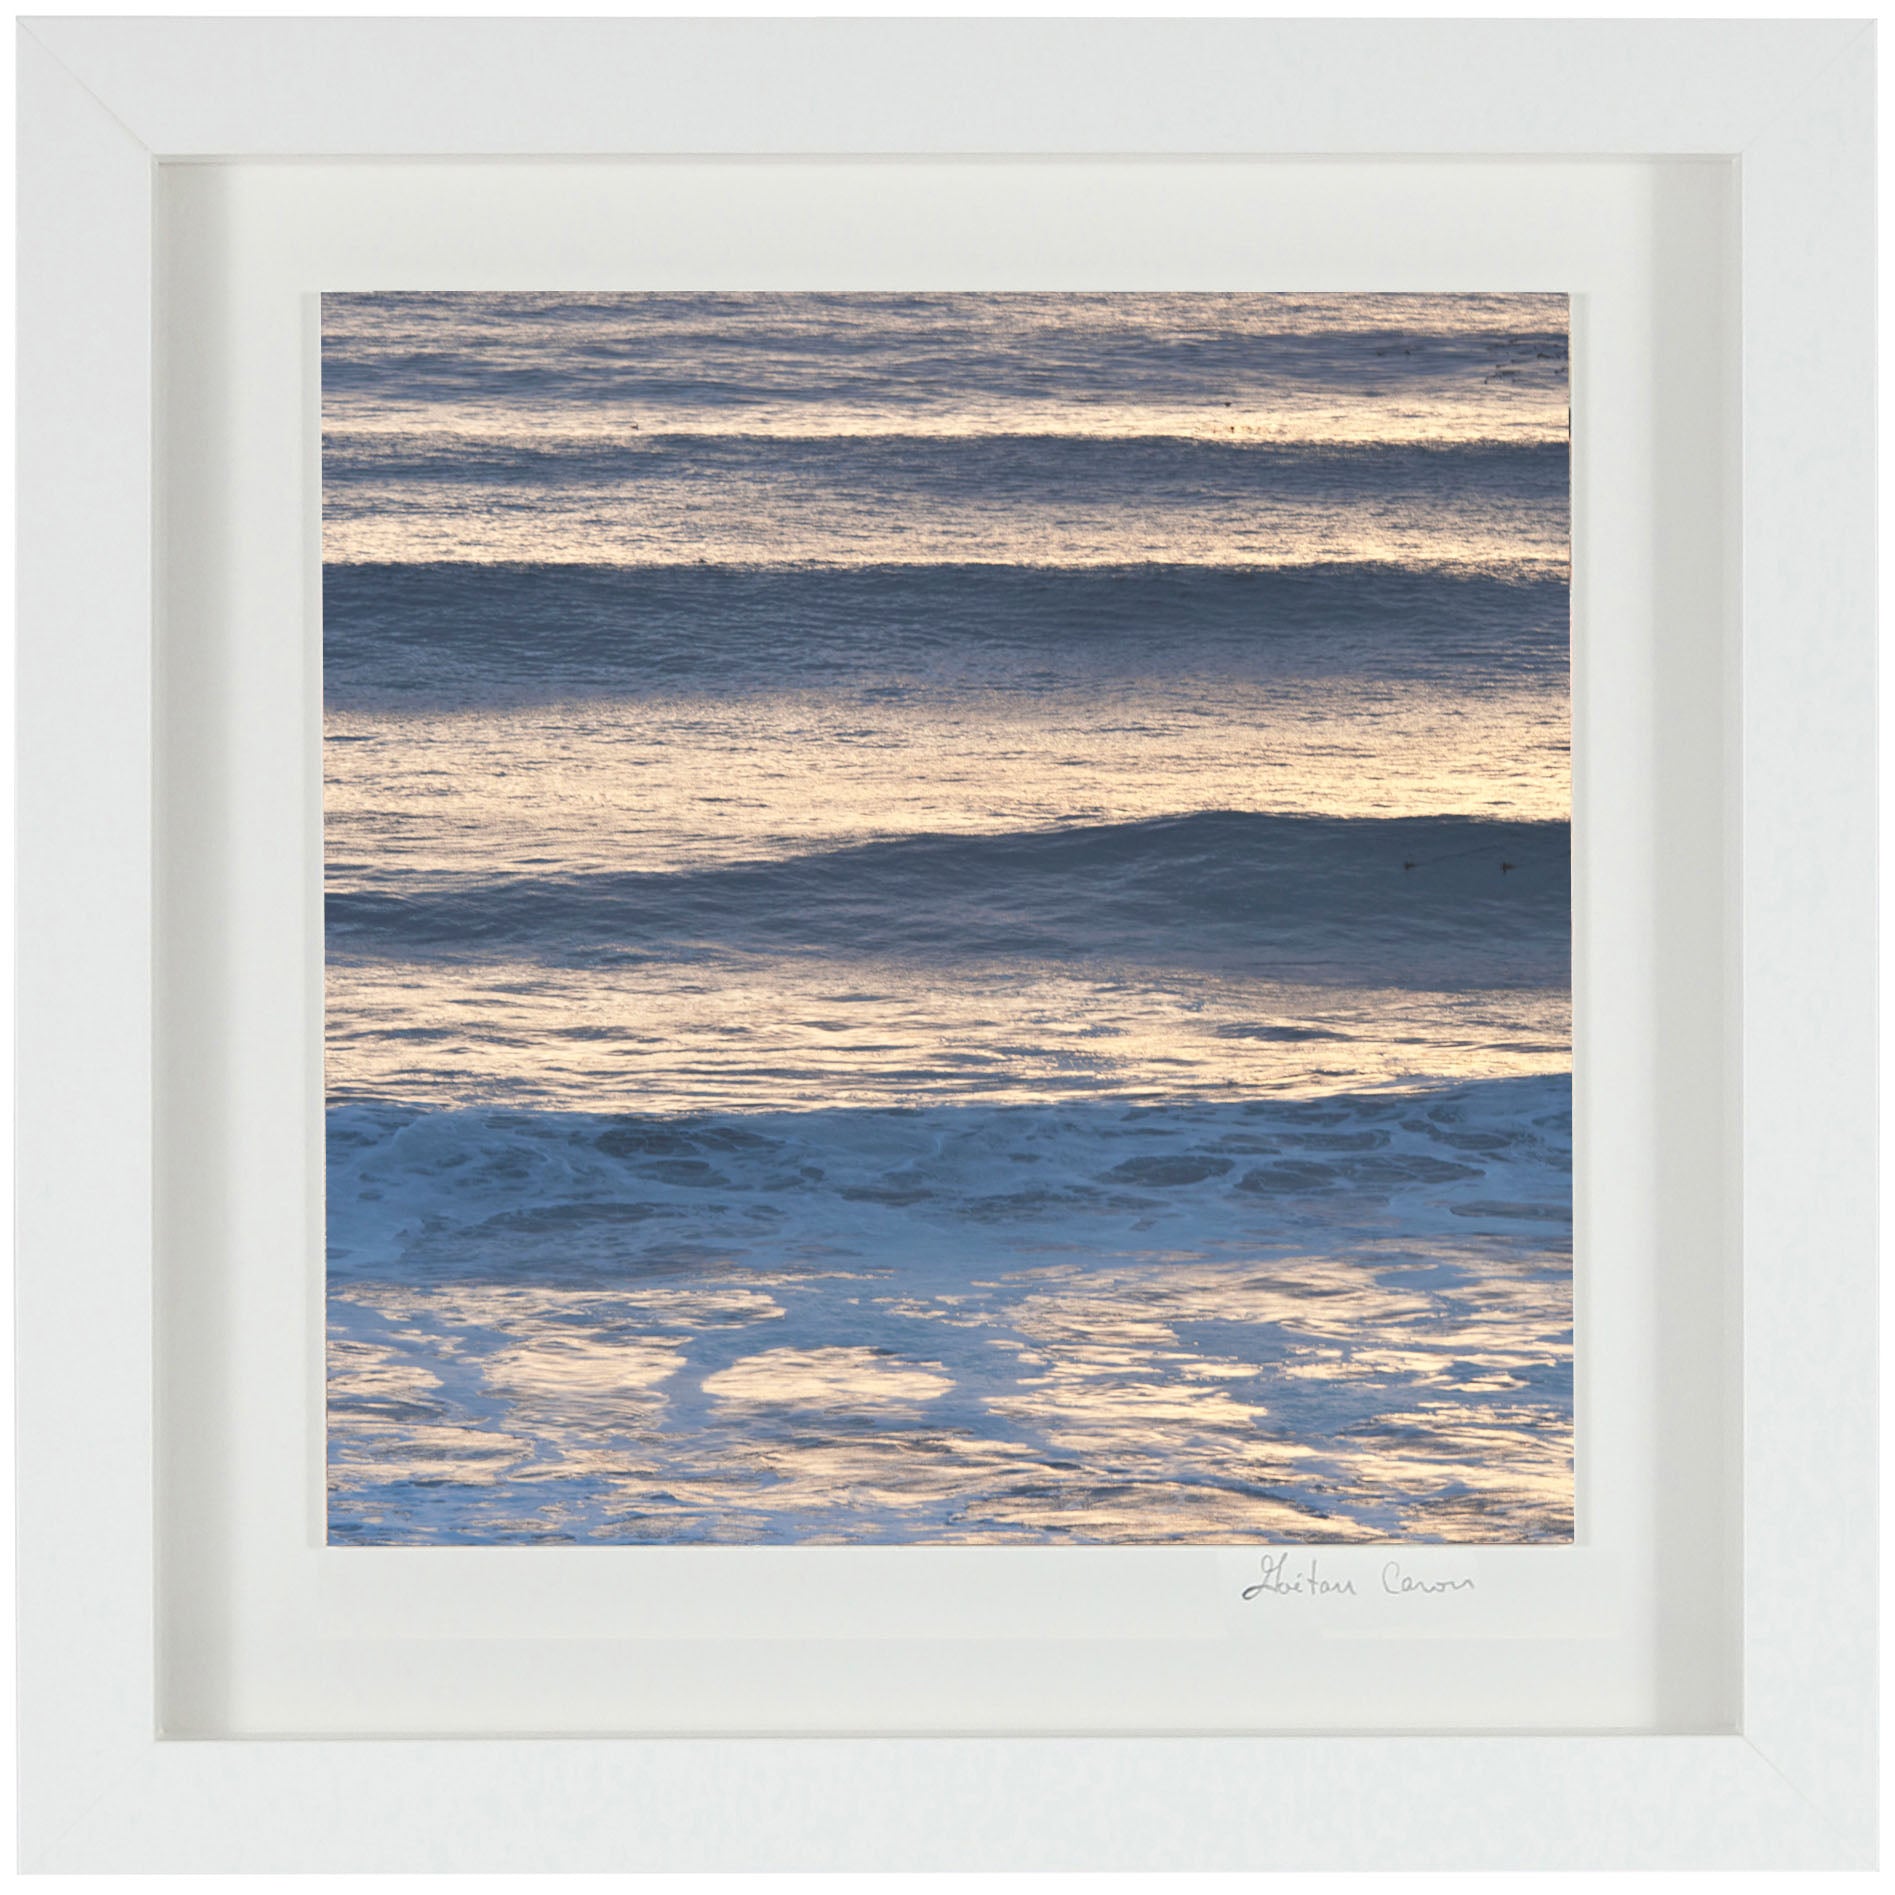 <I>Texture 8: Waves</I><br>Mendocino Coast, California, 2015<br><br>GC0402